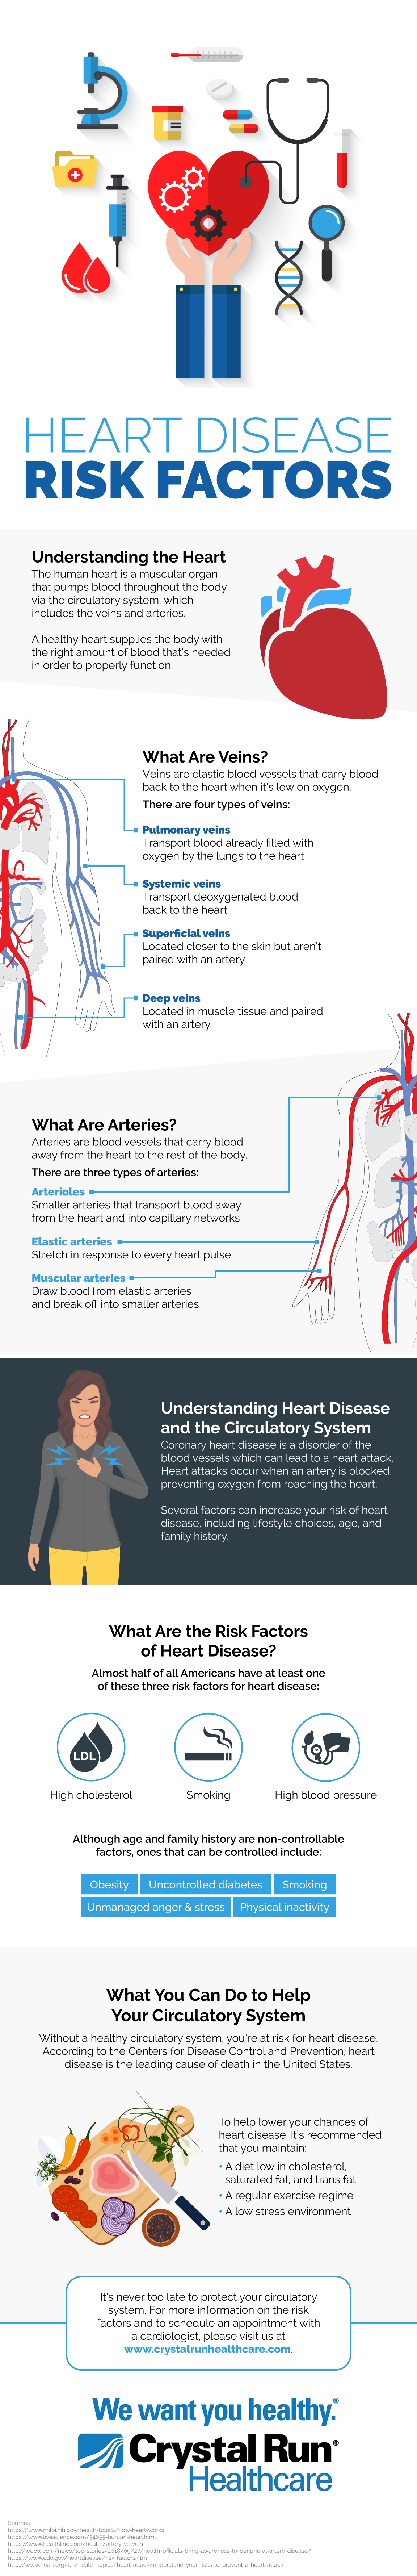 Heart Disease Risk Factors Infographic